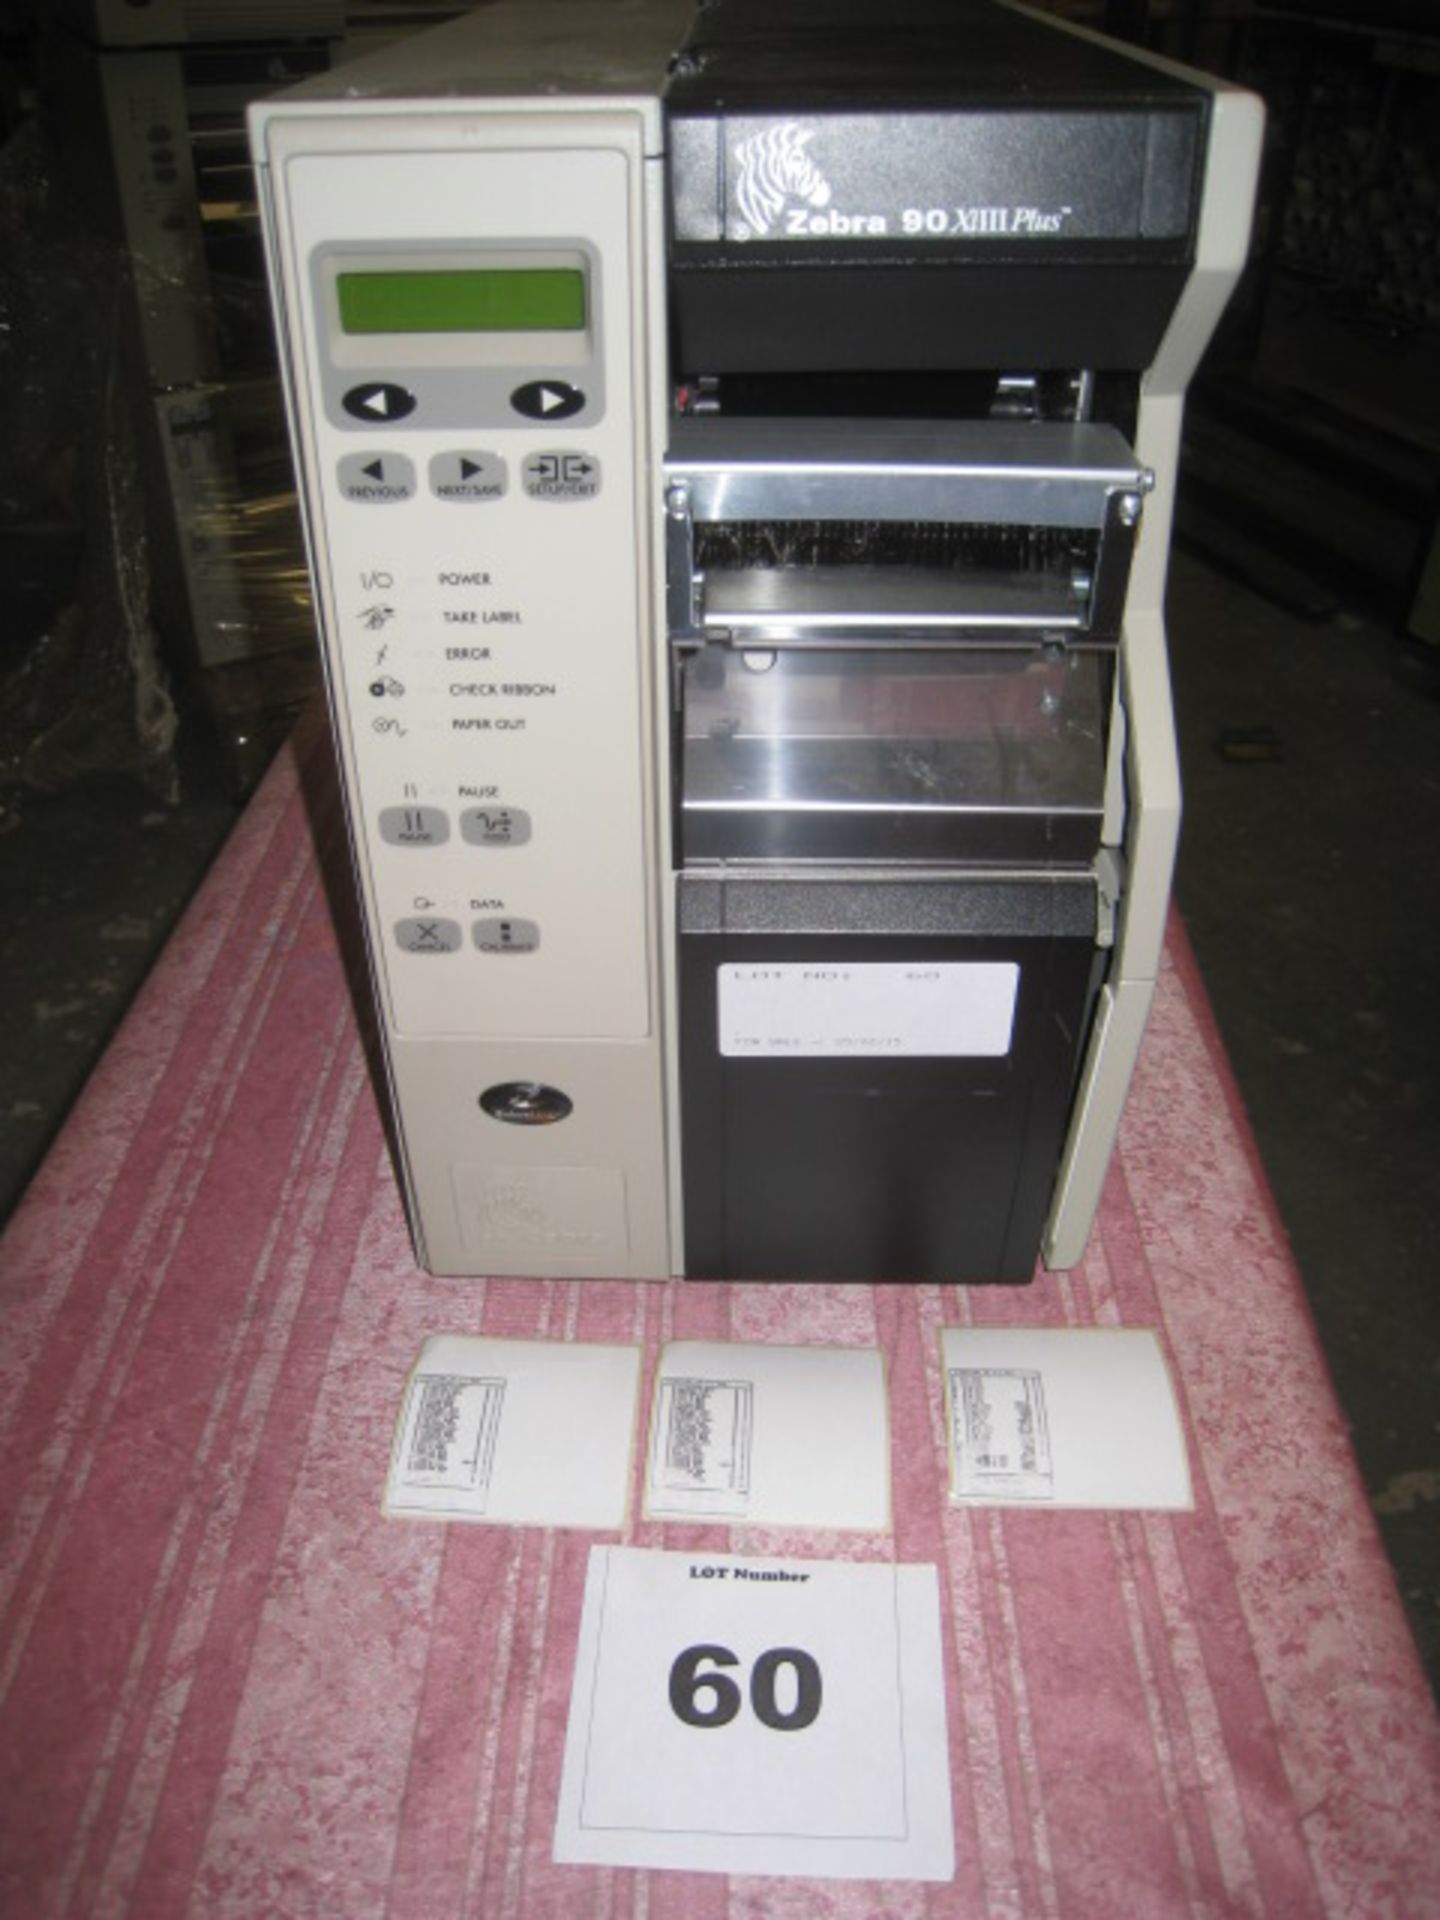 ZEBRA 90 XiIII Plus Label printer with test print